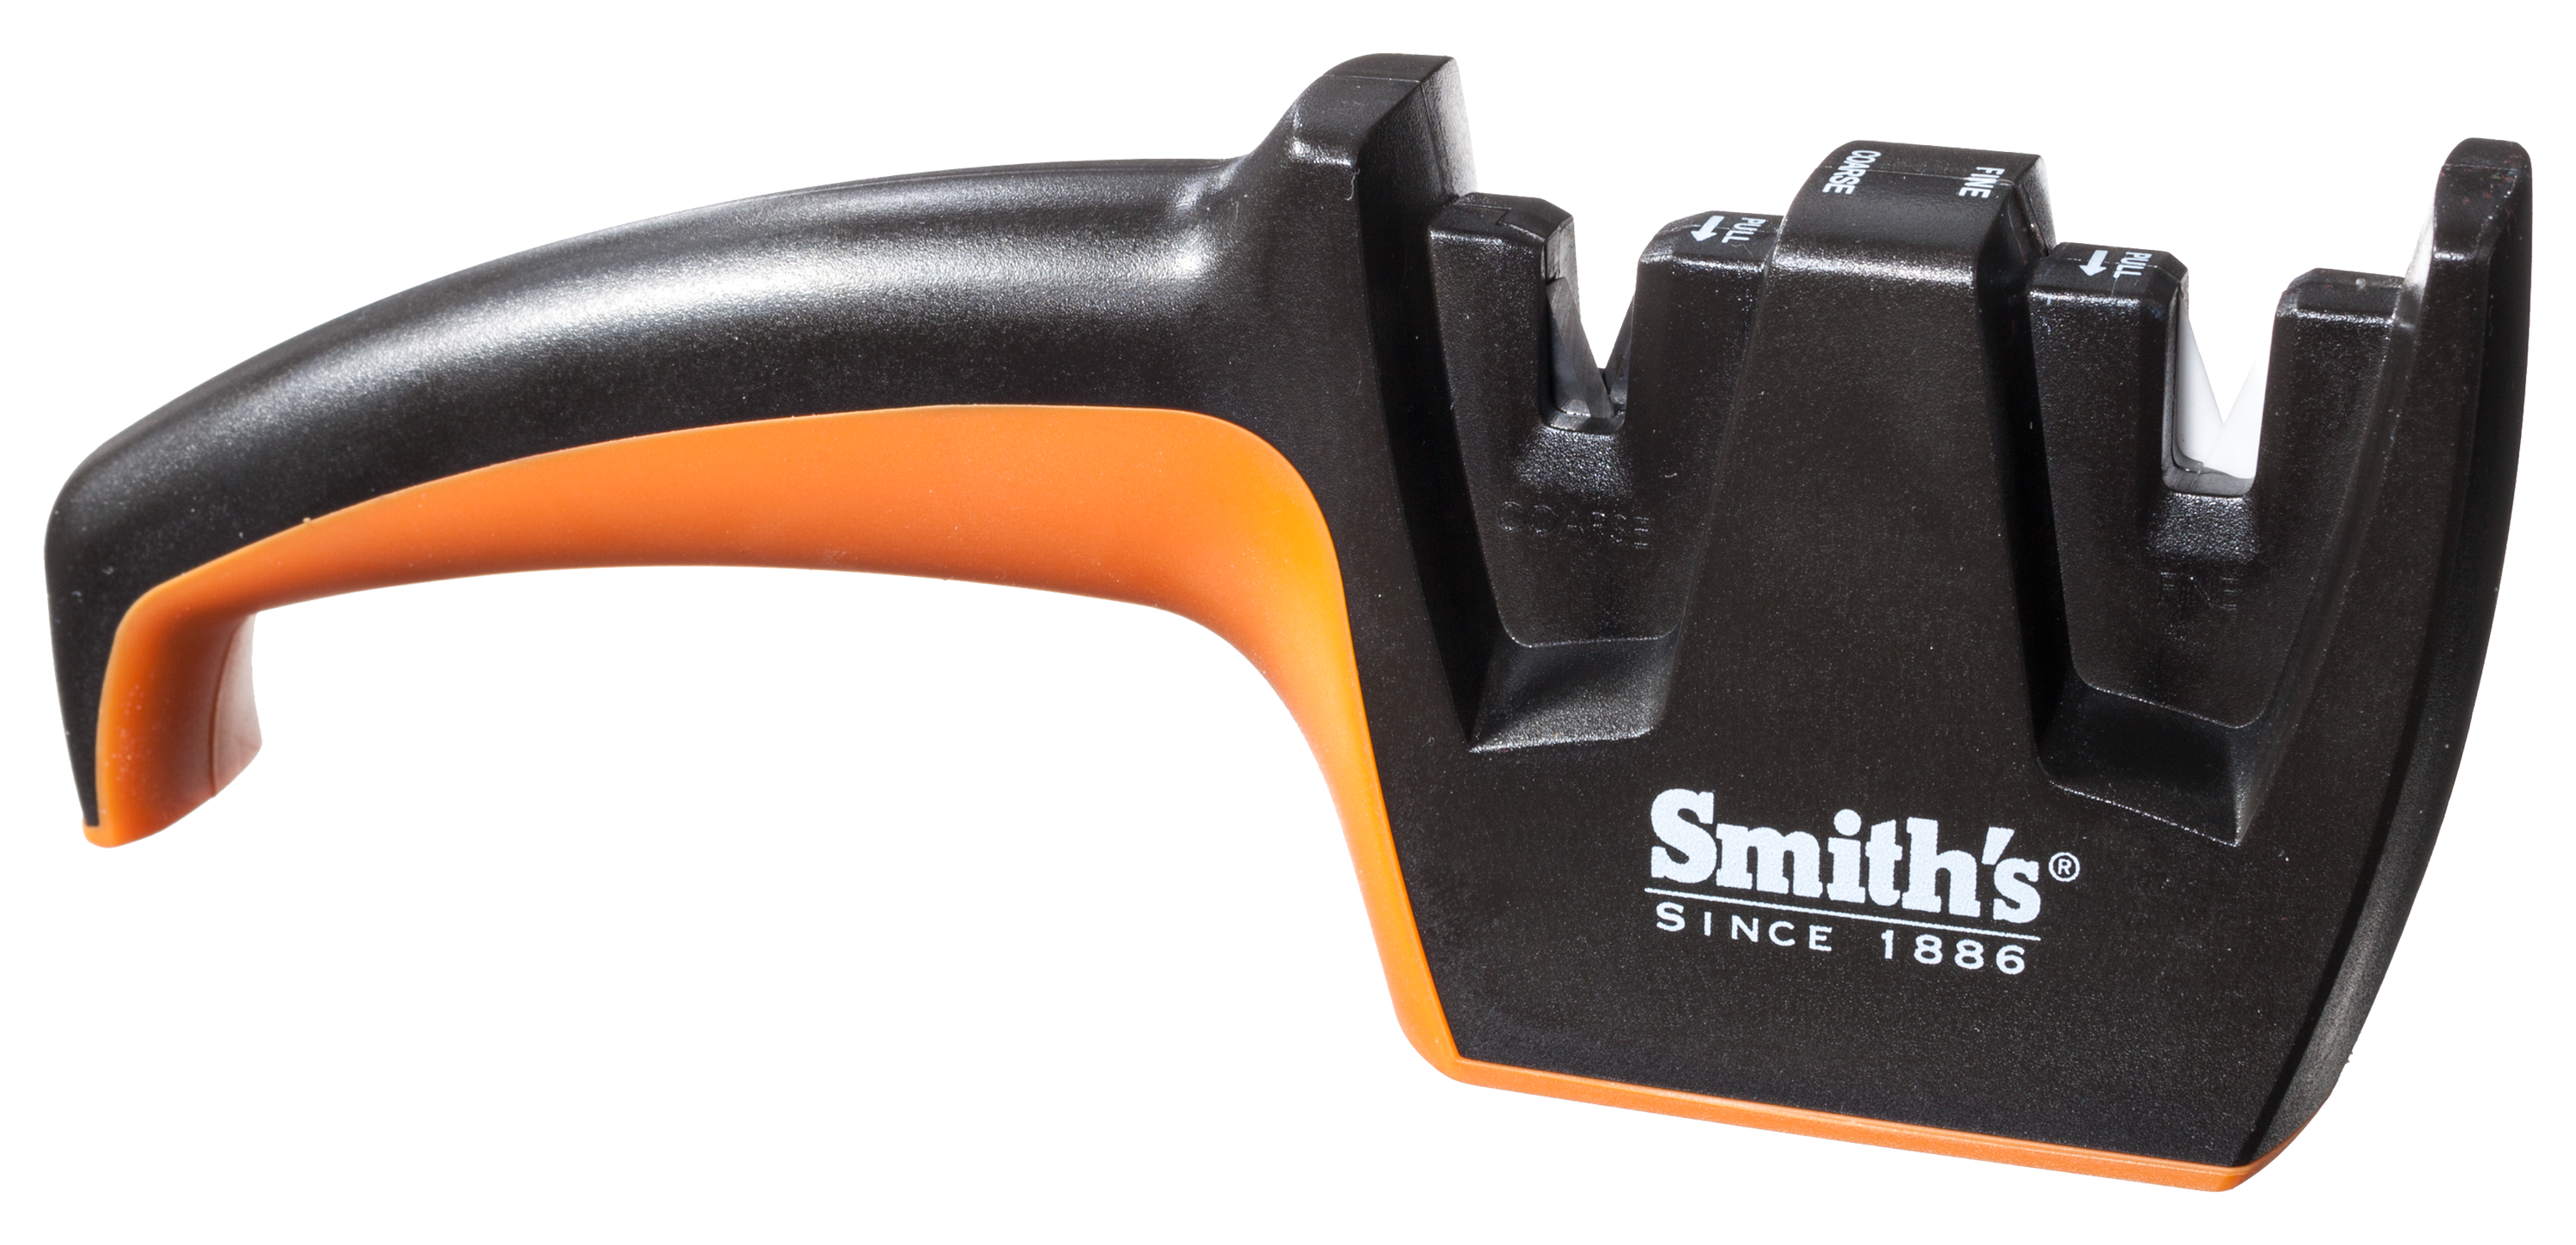 Smiths Adjustable Edge Pro Electric Knife Sharpener Review